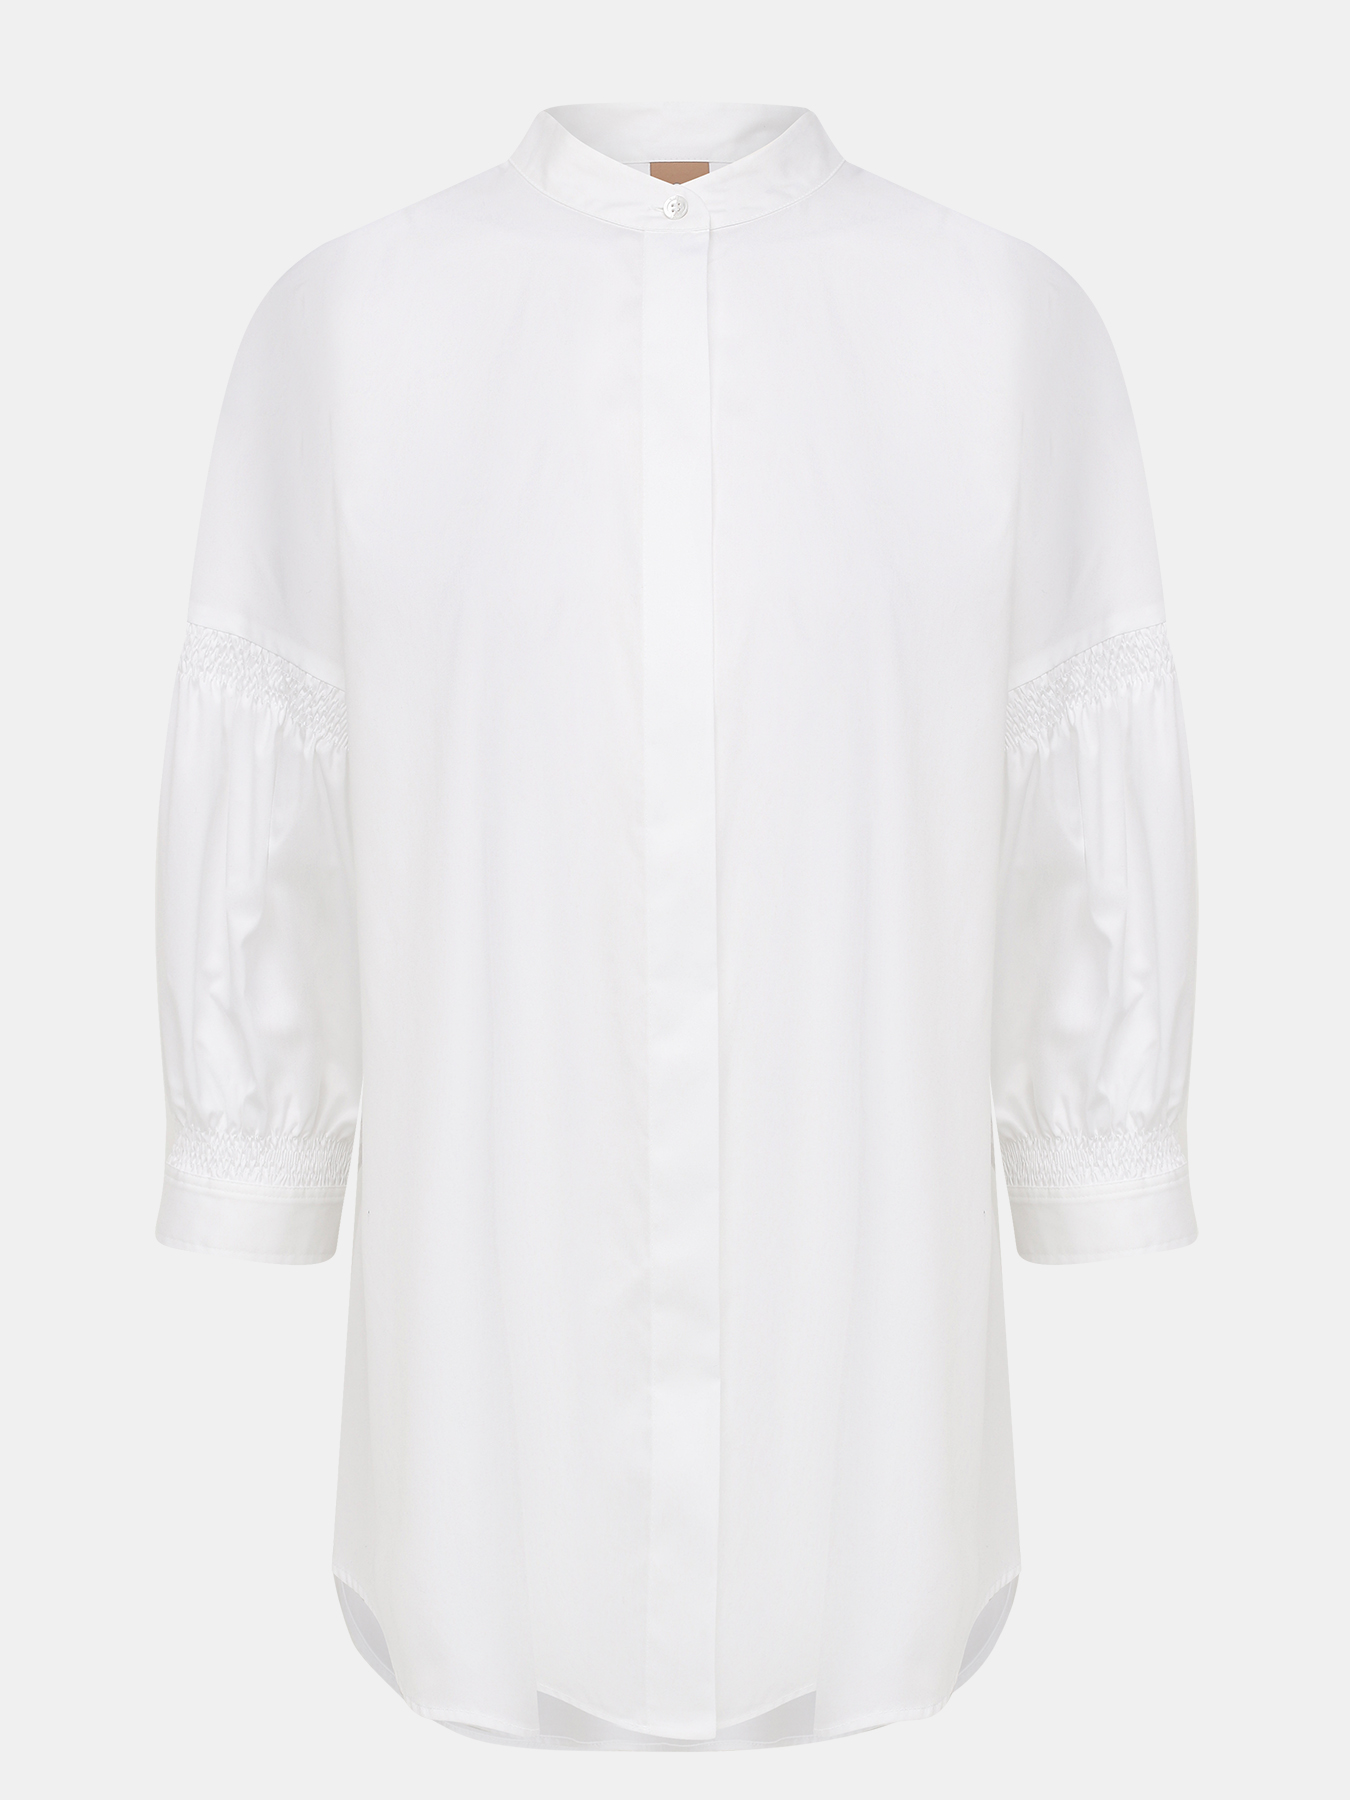 Блузка Besmoa BOSS 420534-020, цвет белый, размер 44